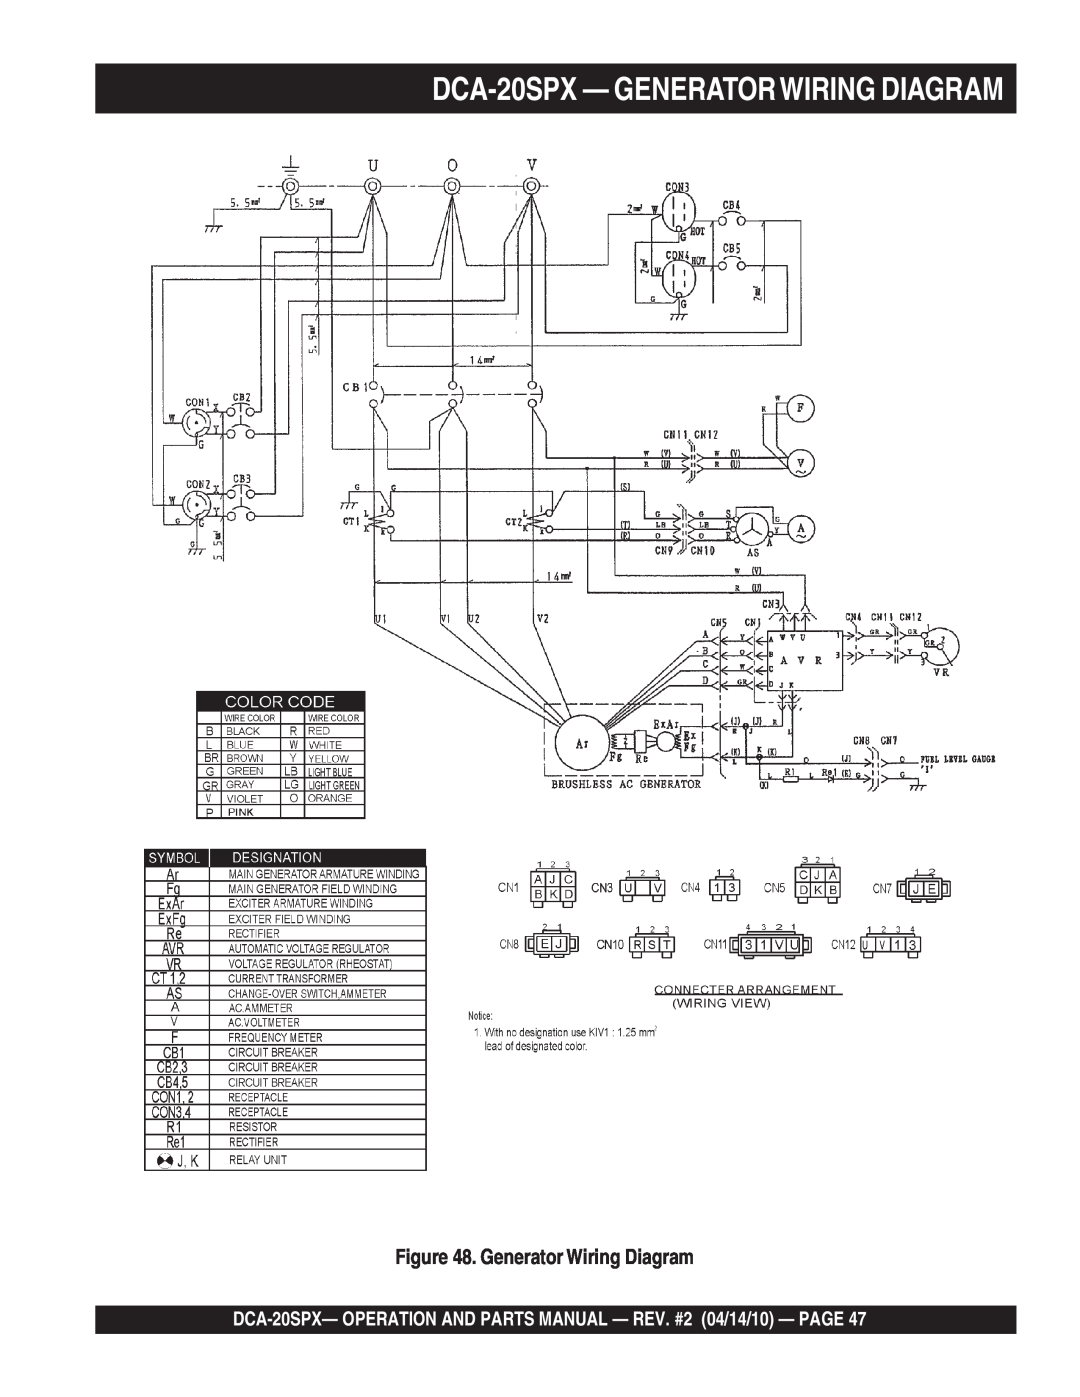 Multiquip operation manual DCA-20SPX - GENERATORWIRING DIAGRAM, Generator Wiring Diagram 